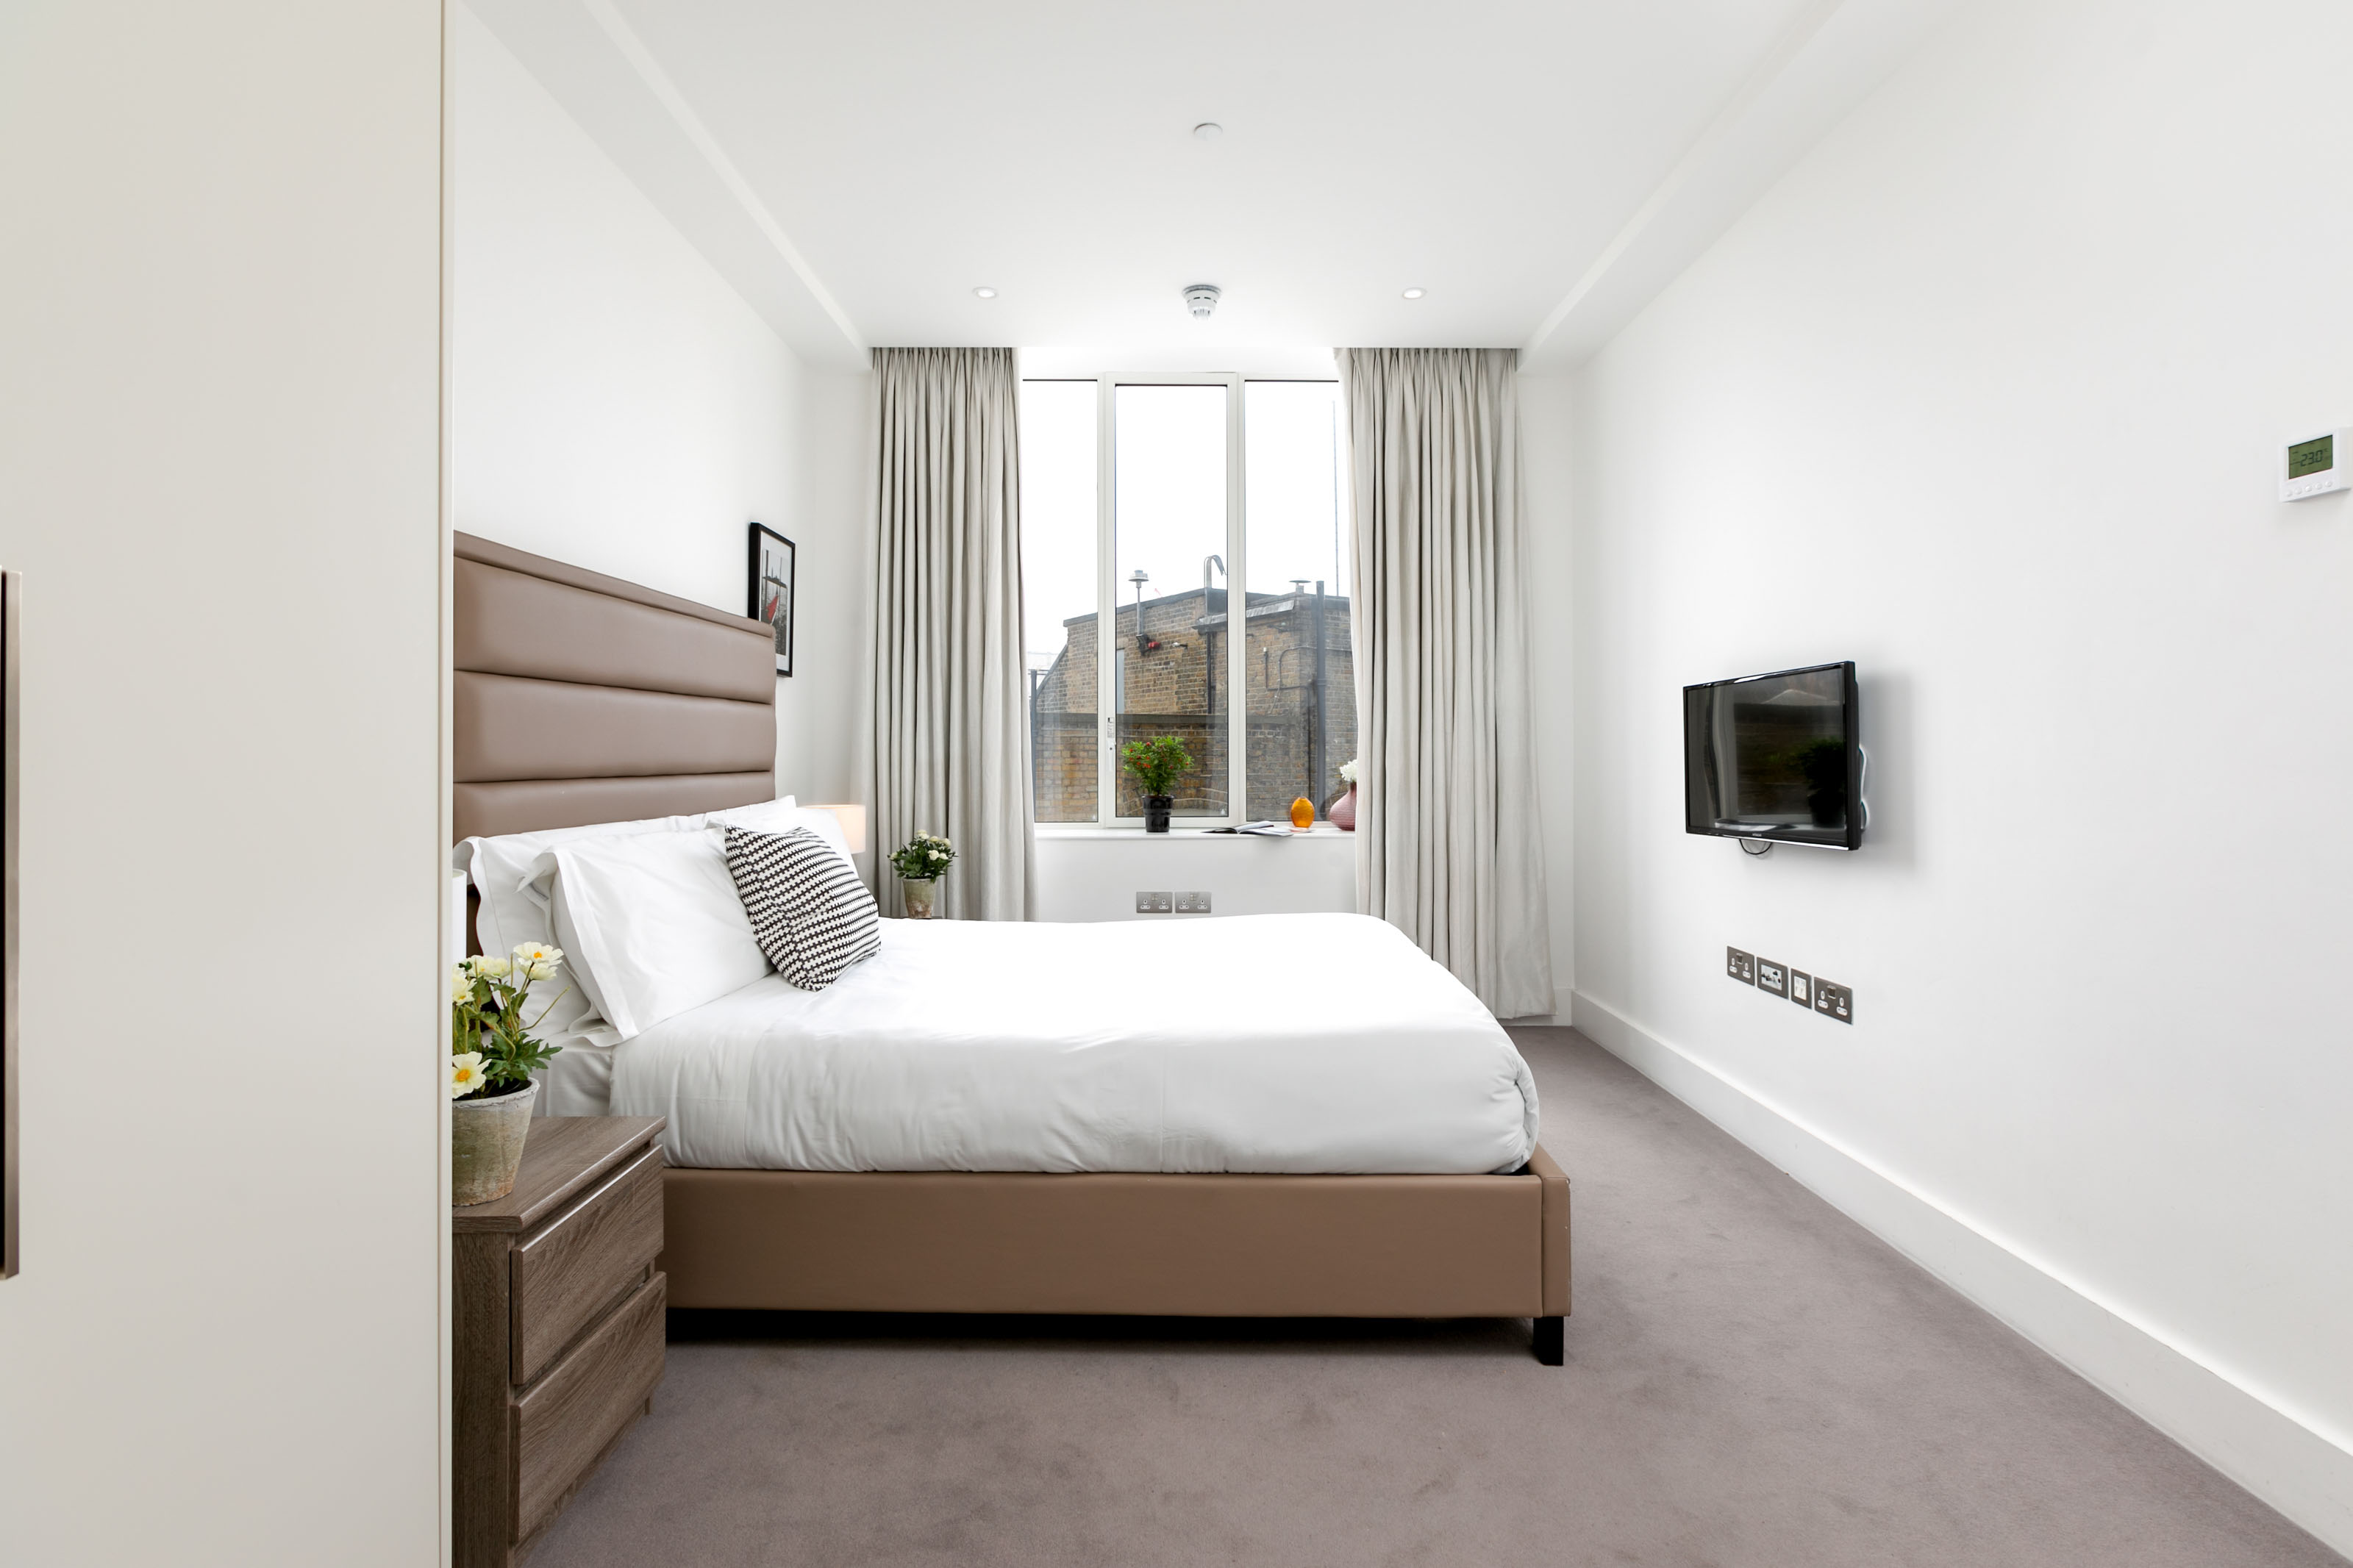 Lovelydays luxury service apartment rental - London - Covent Garden - Prince's House 506 - Lovelysuite - 2 bedrooms - 2 bathrooms - Double bed - c83c0234cf34 - Lovelydays